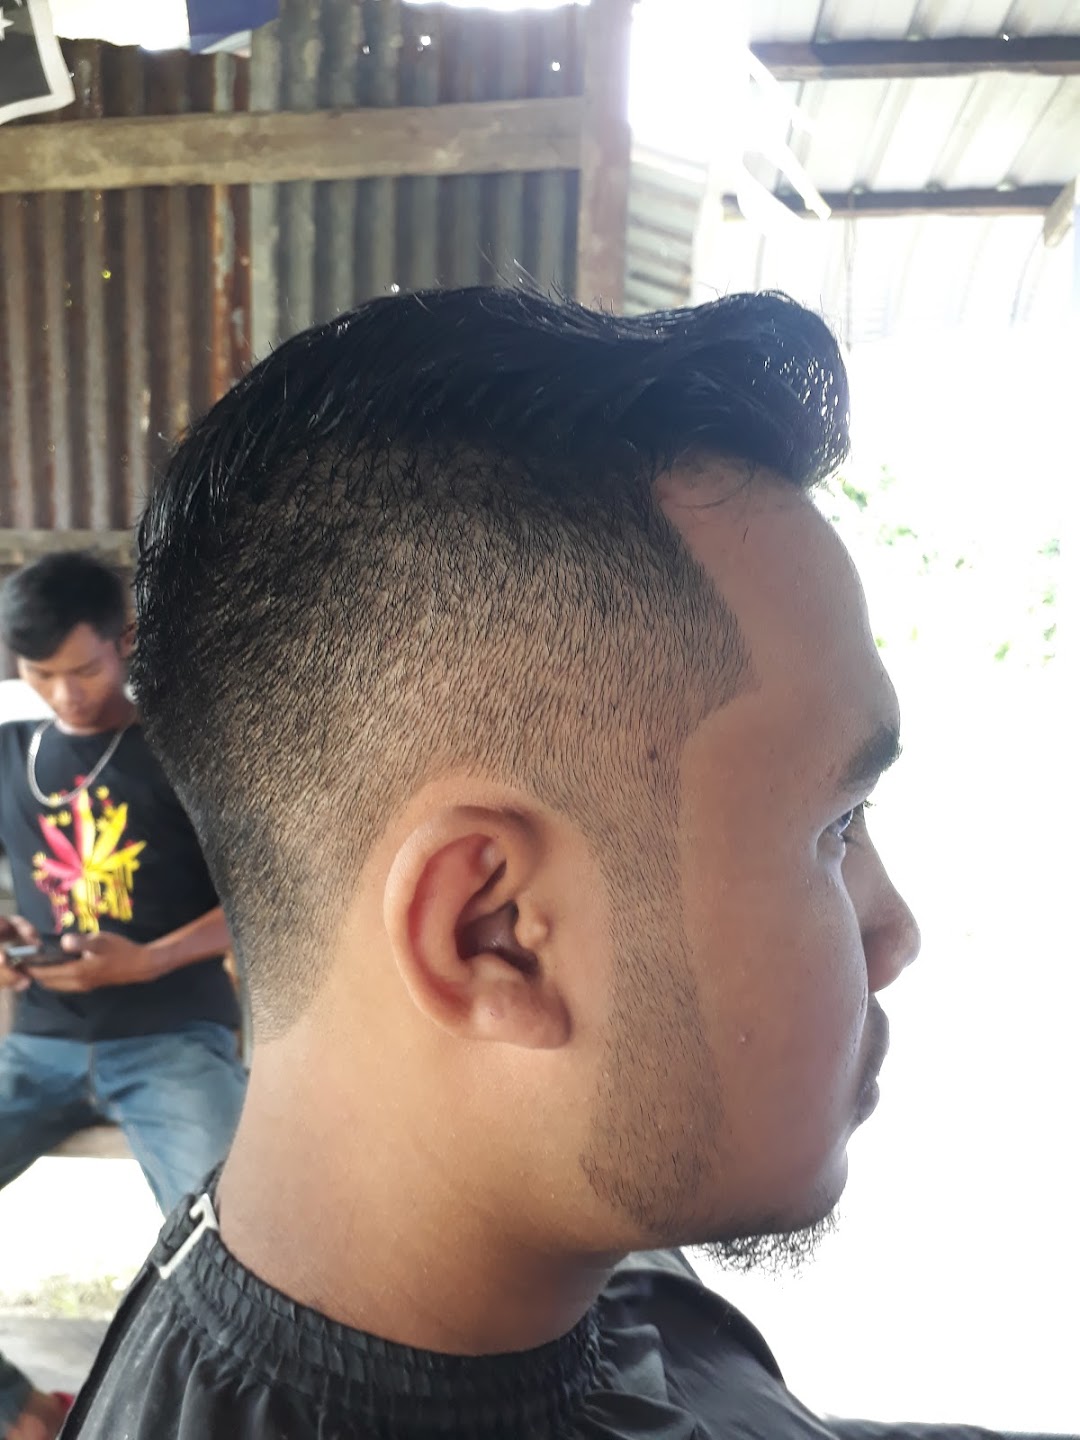 wan barber shop